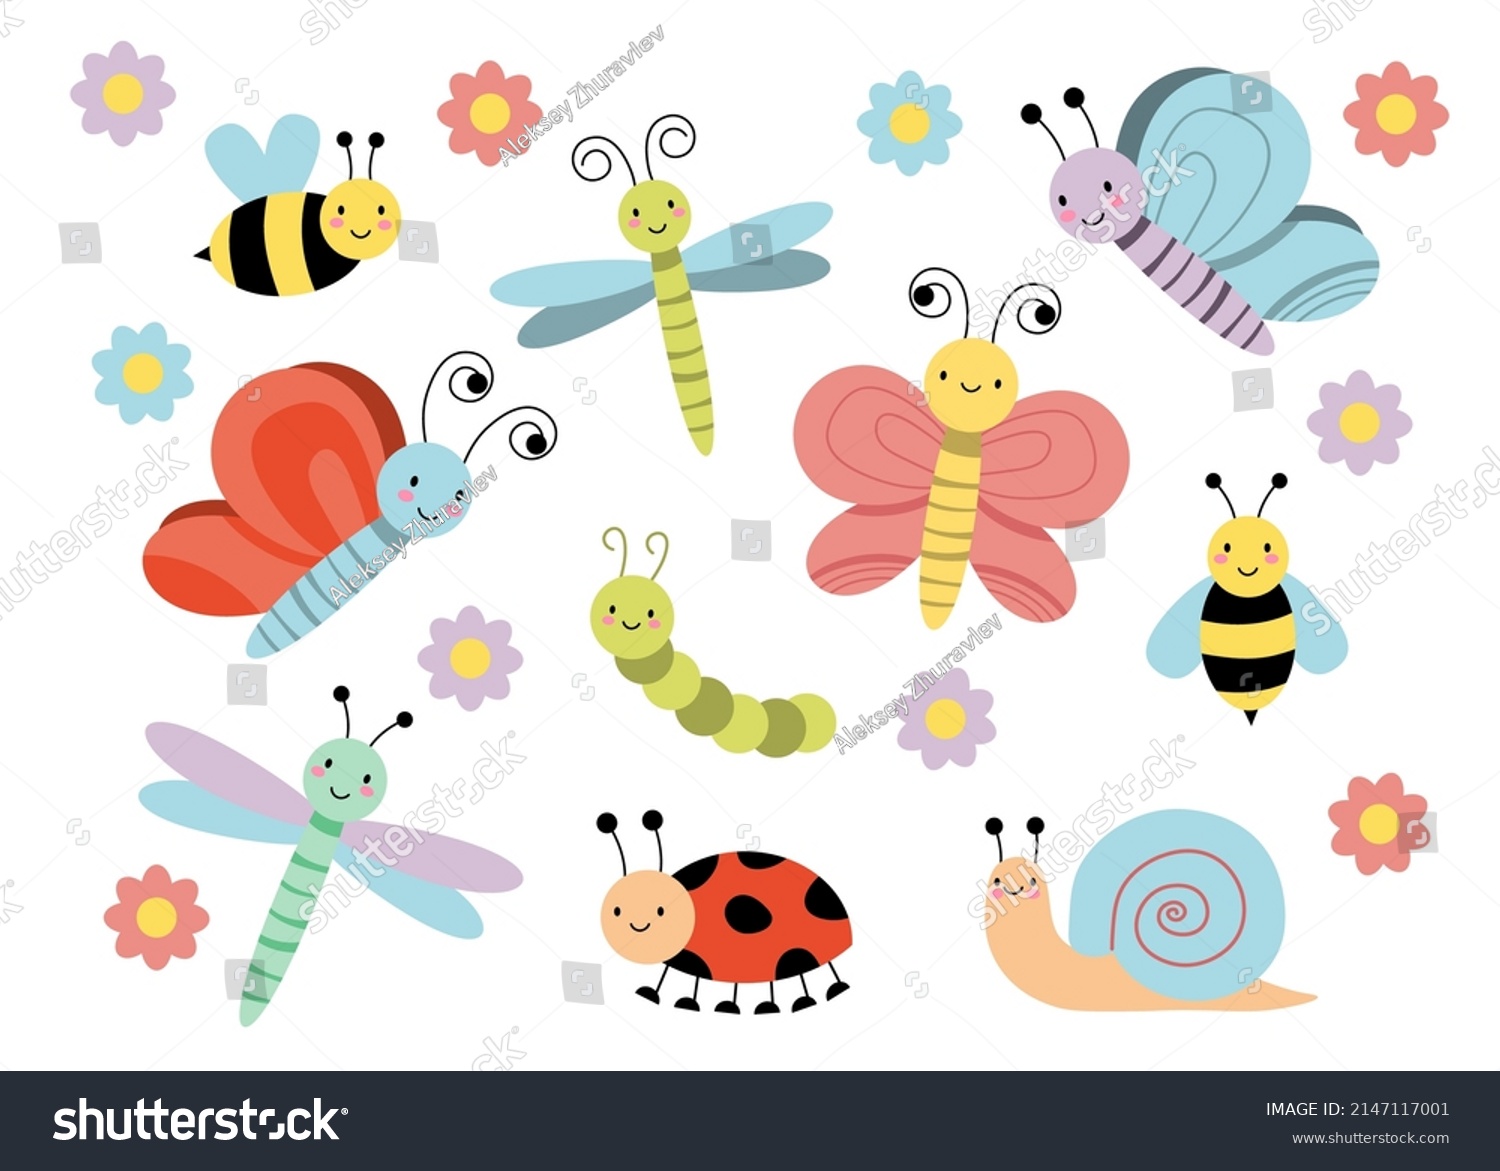 9,754 Cute caterpillar vector Images, Stock Photos & Vectors | Shutterstock